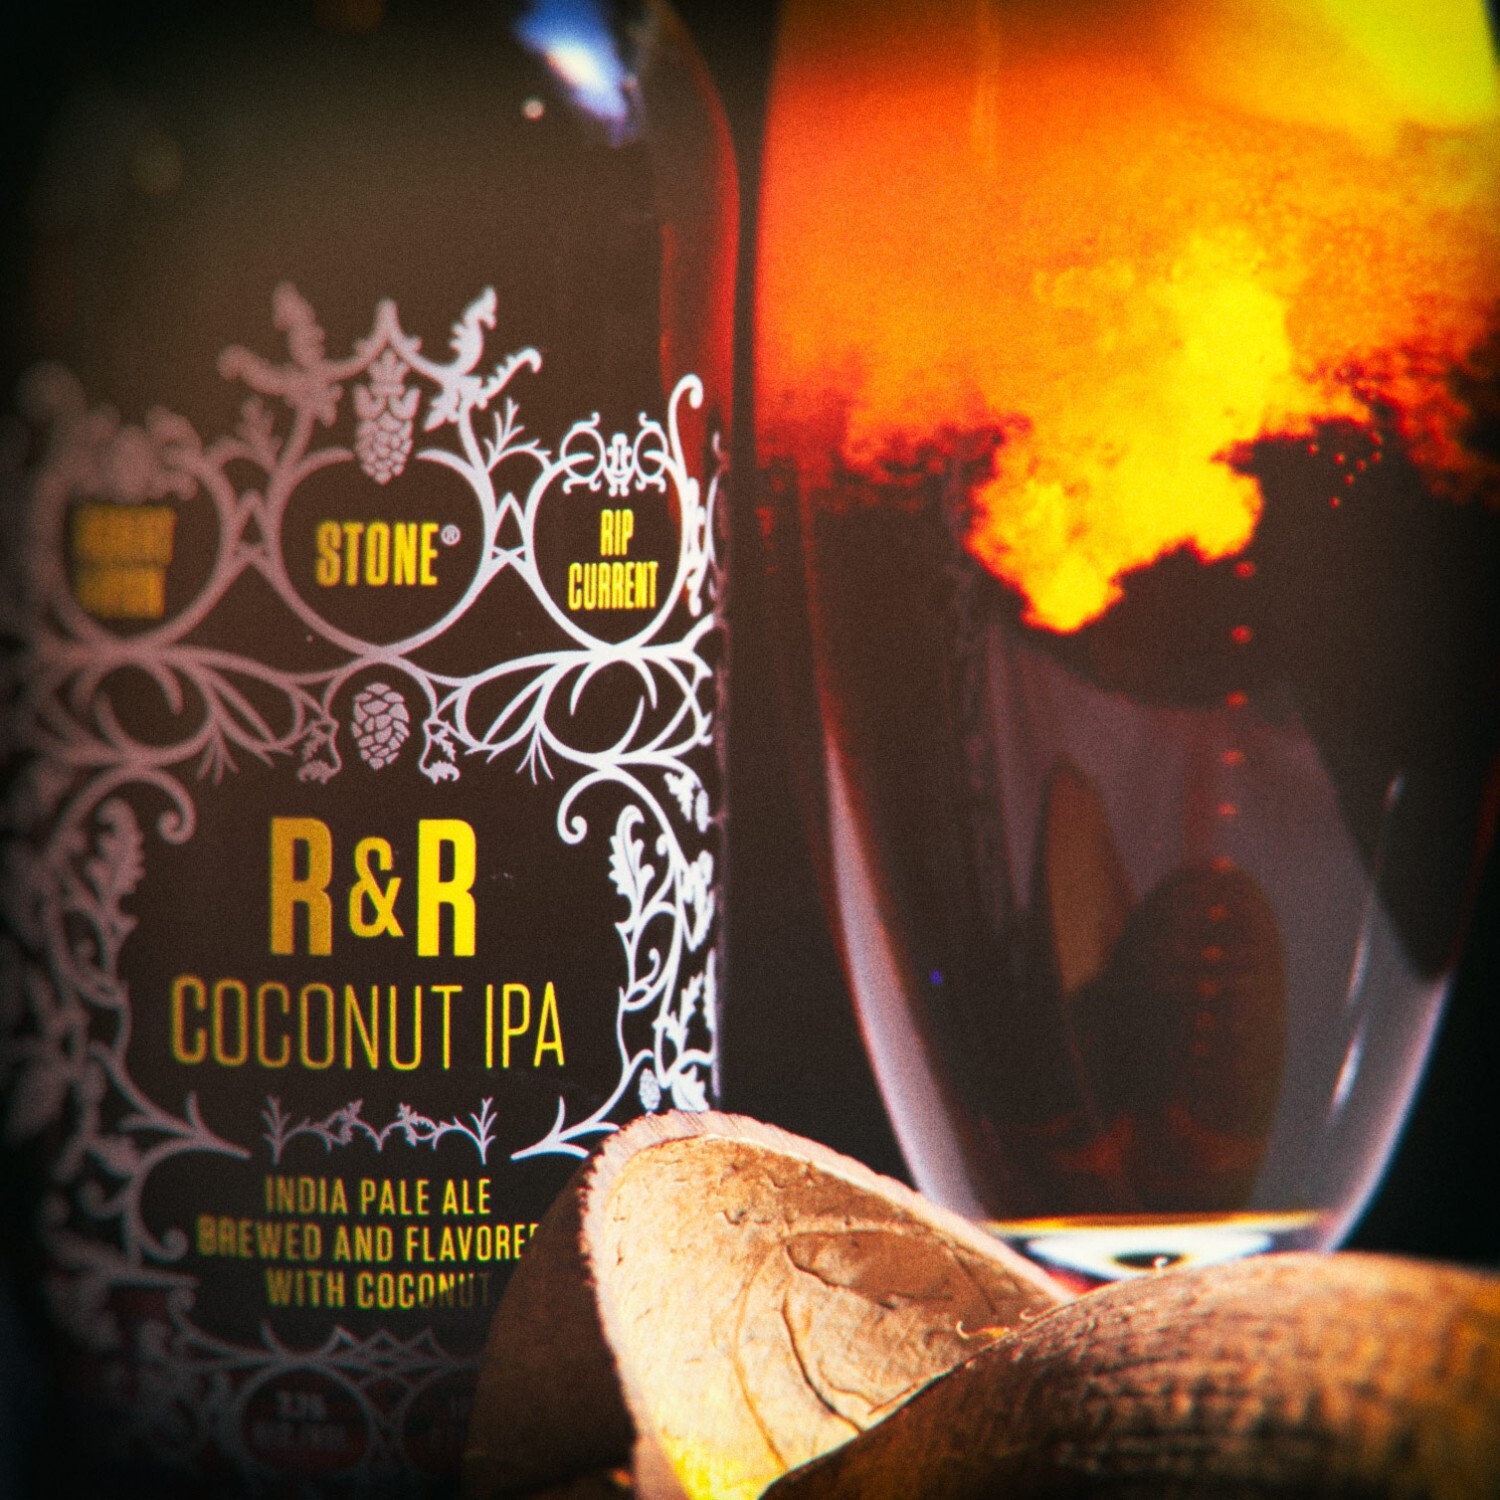 bottle of Robert Masterson & Ryan Reschan / Rip Current / Stone R&R Coconut IPA with bright orange smoke